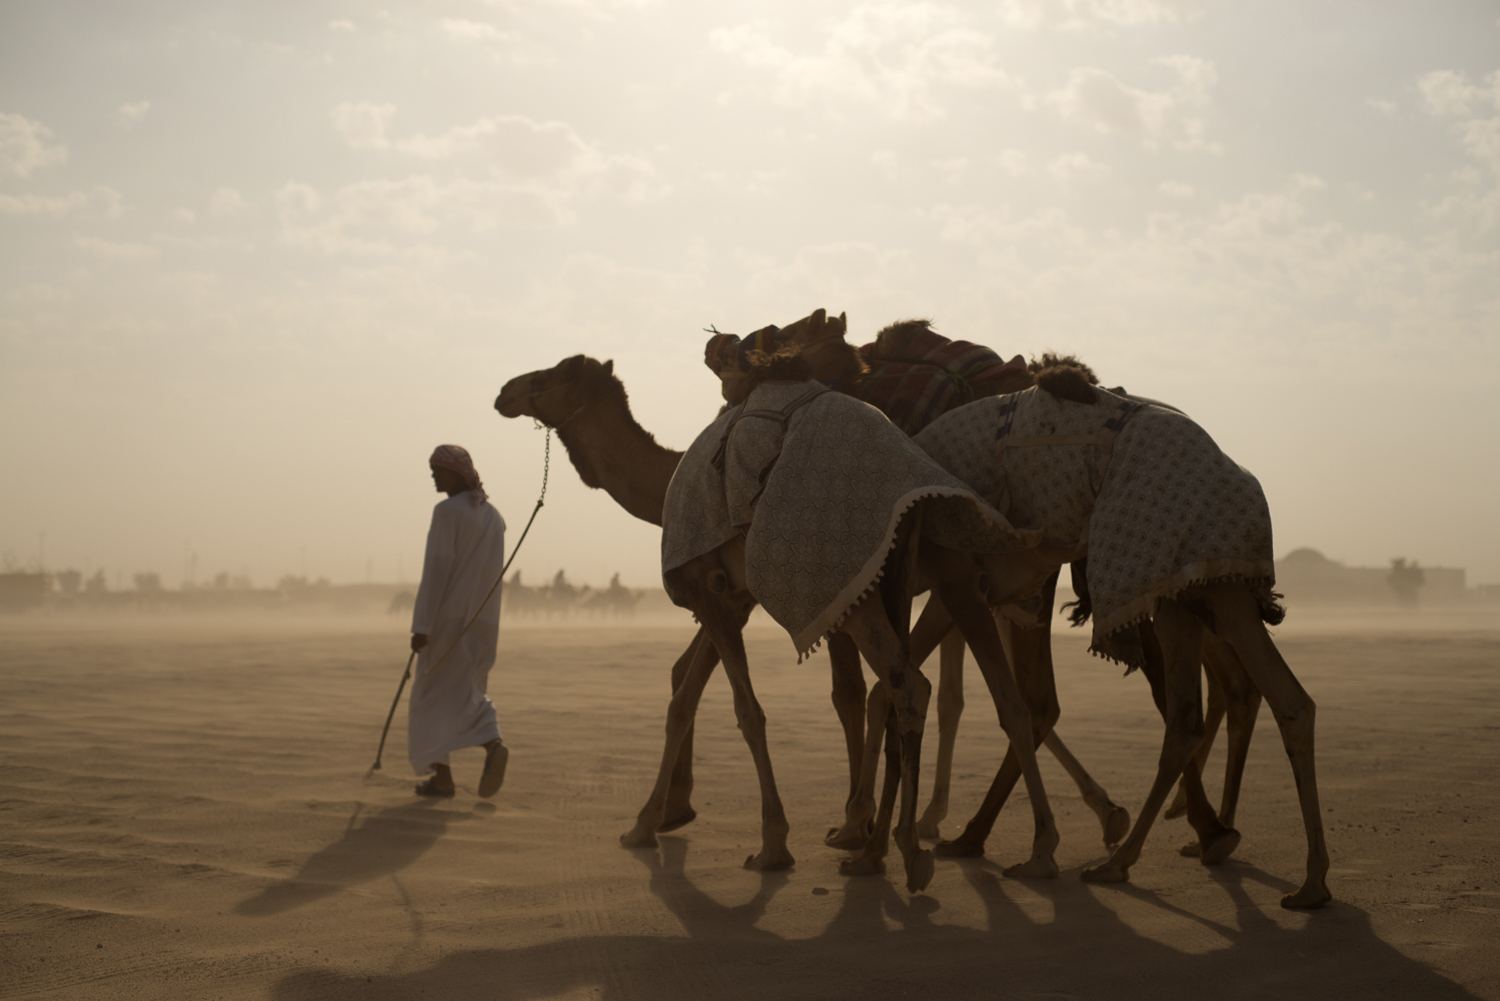 jo-kearney-video-photos-photography-travel-portraits-prints-for-sale-dubai-camels-camel-herder-dubai-UAE-desert-racing-camels-sand.jpg